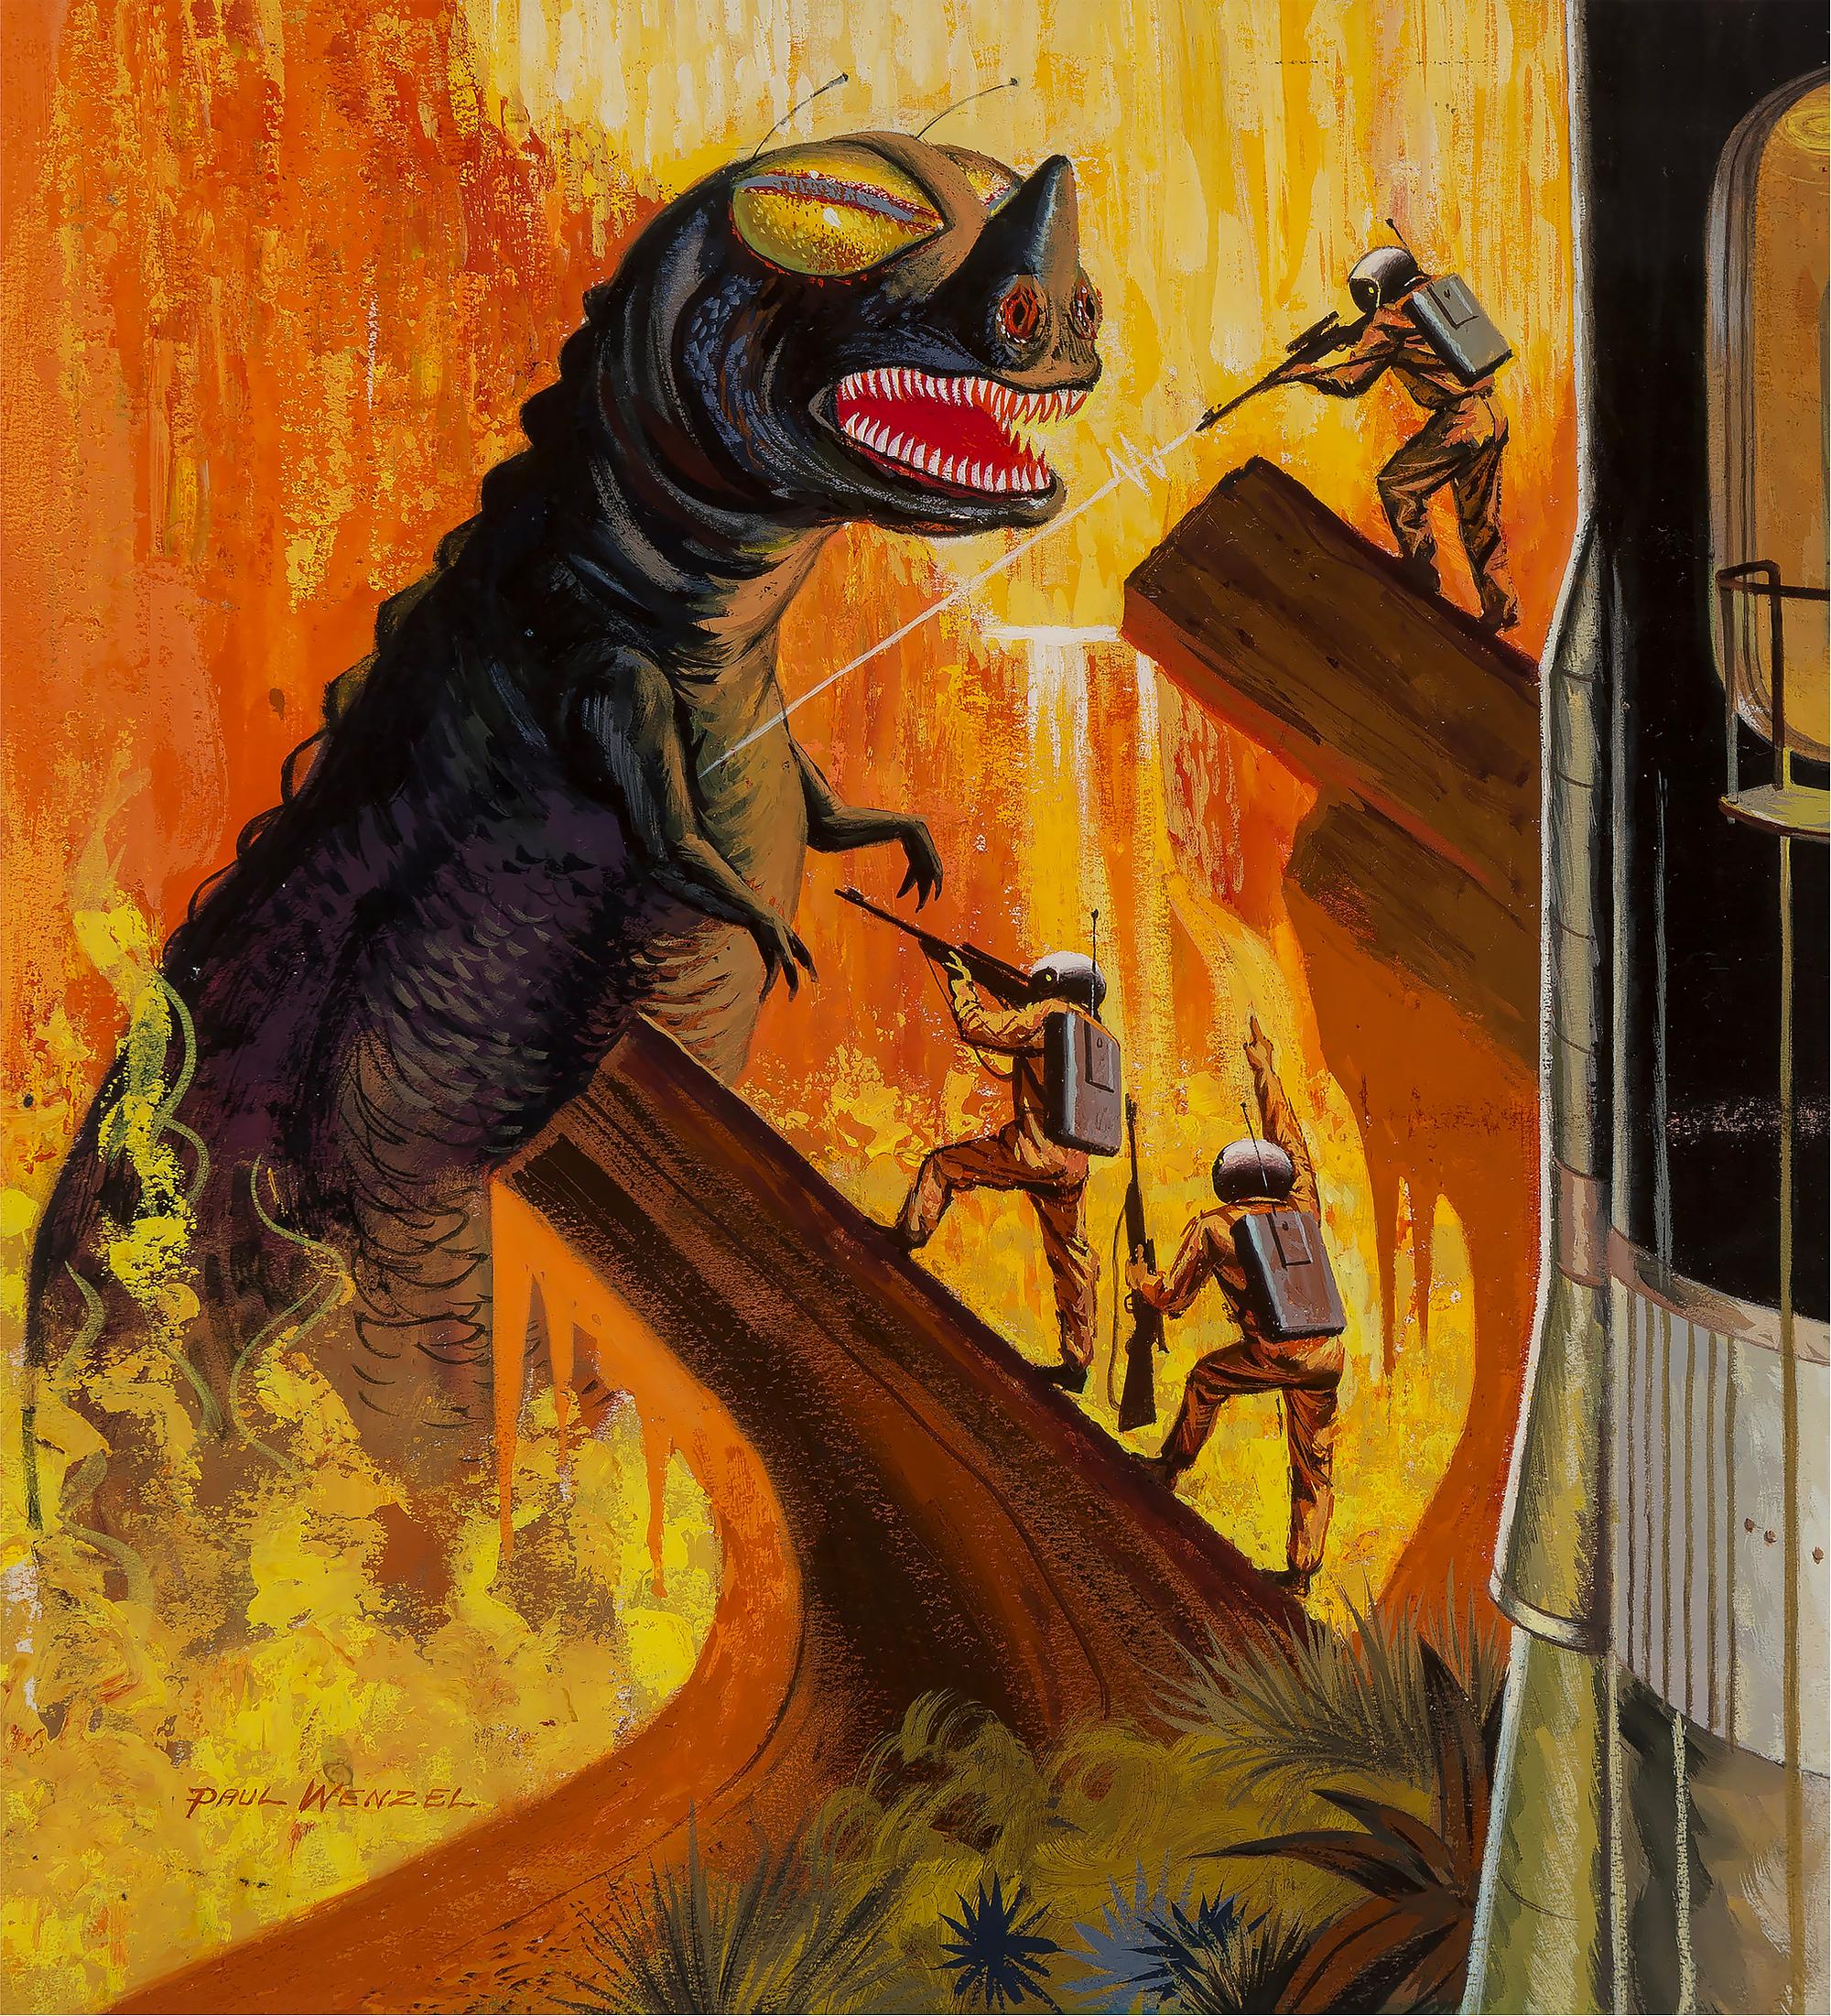 Paul Wenzel Animal Painting – Godzilla like Dinosaur Monster, SciFi, Science Fiction Cover Illustration